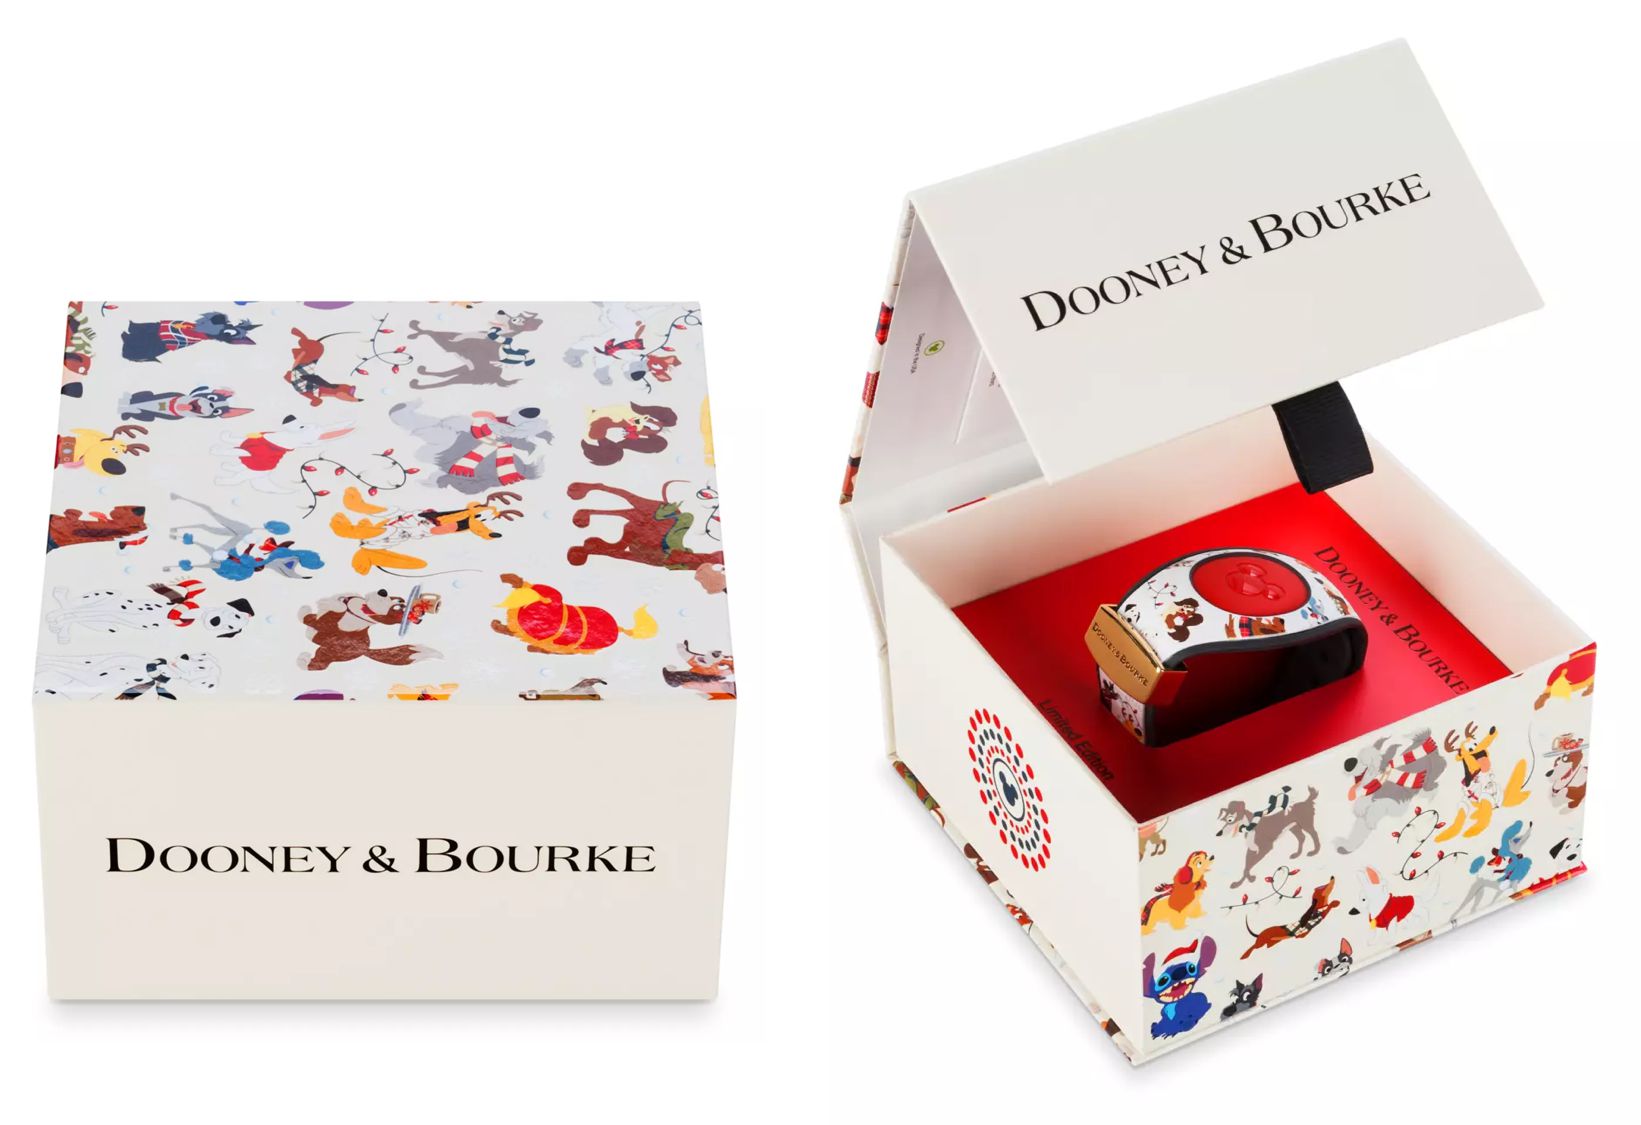 Disney Dooney and Bourke - Santa Tails Crossbody